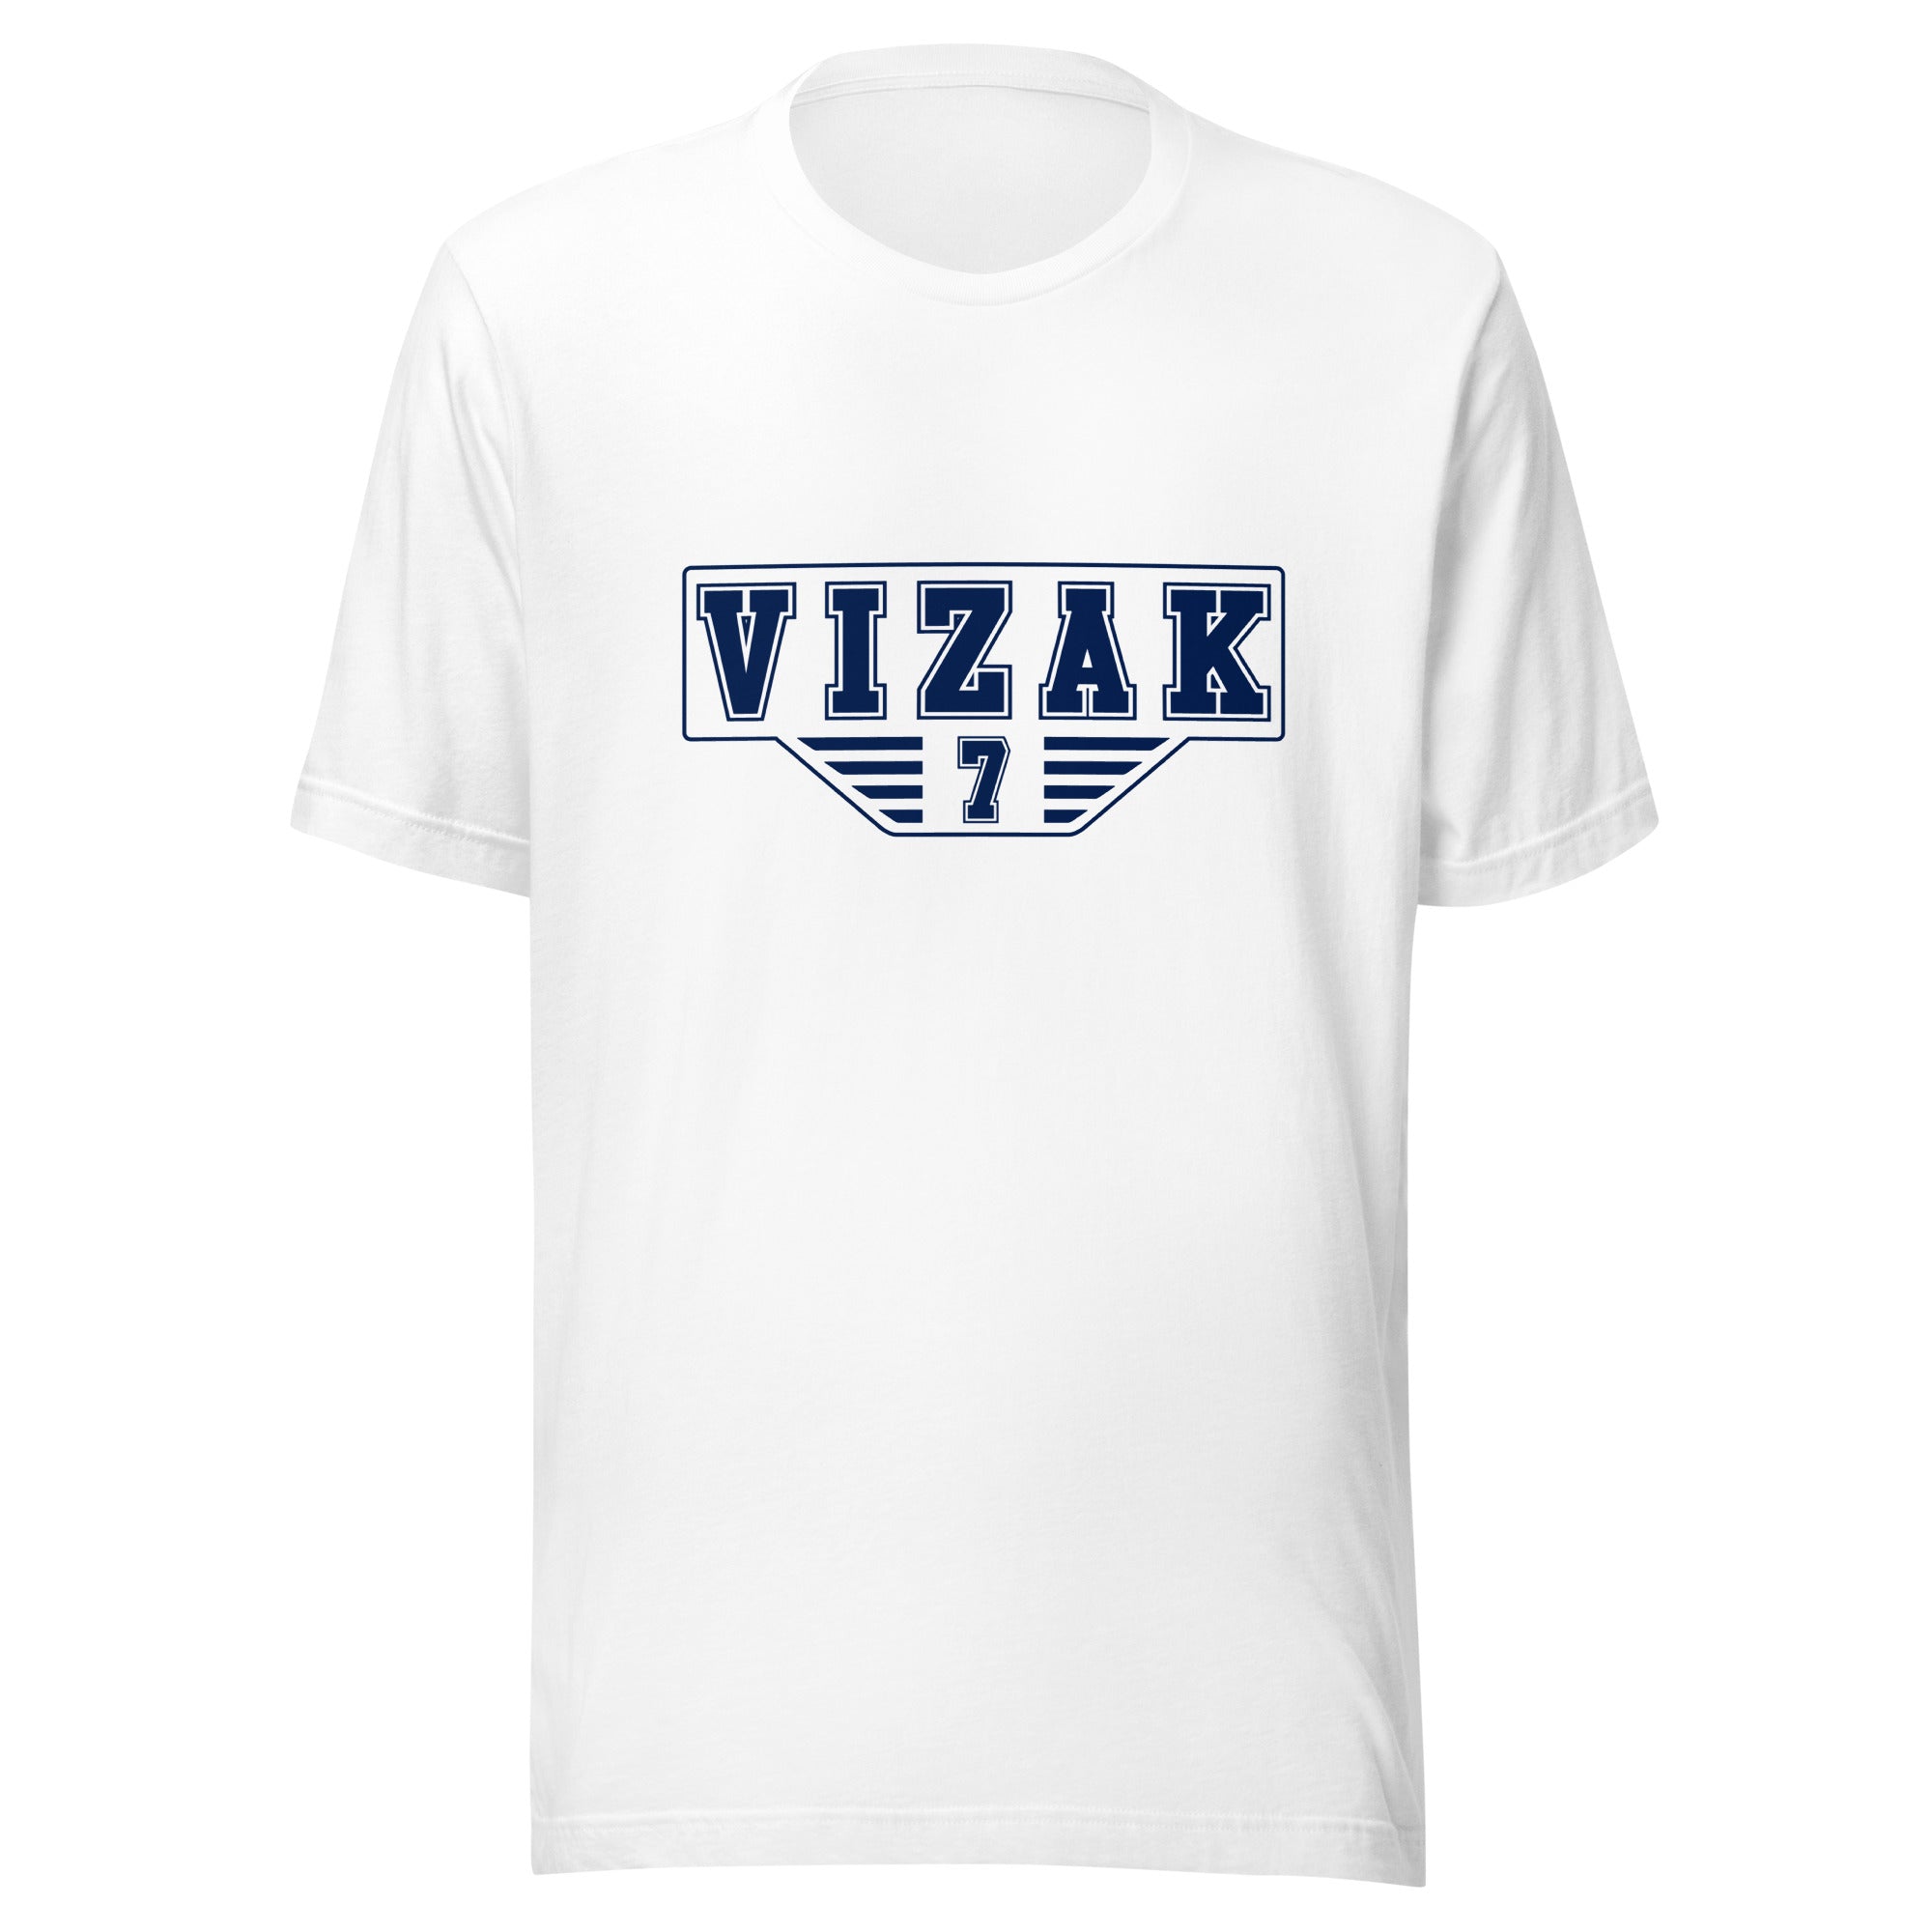 Vizak #7 - Unisex t-shirt